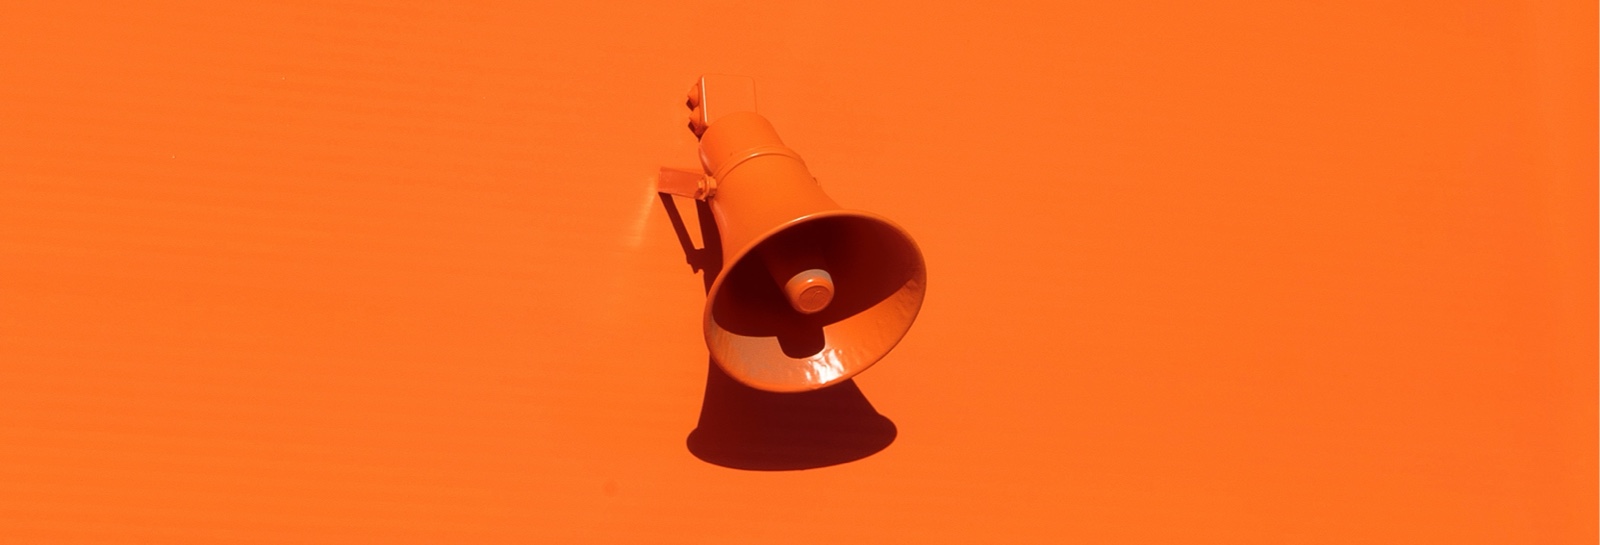 an orange megaphone on an orange background